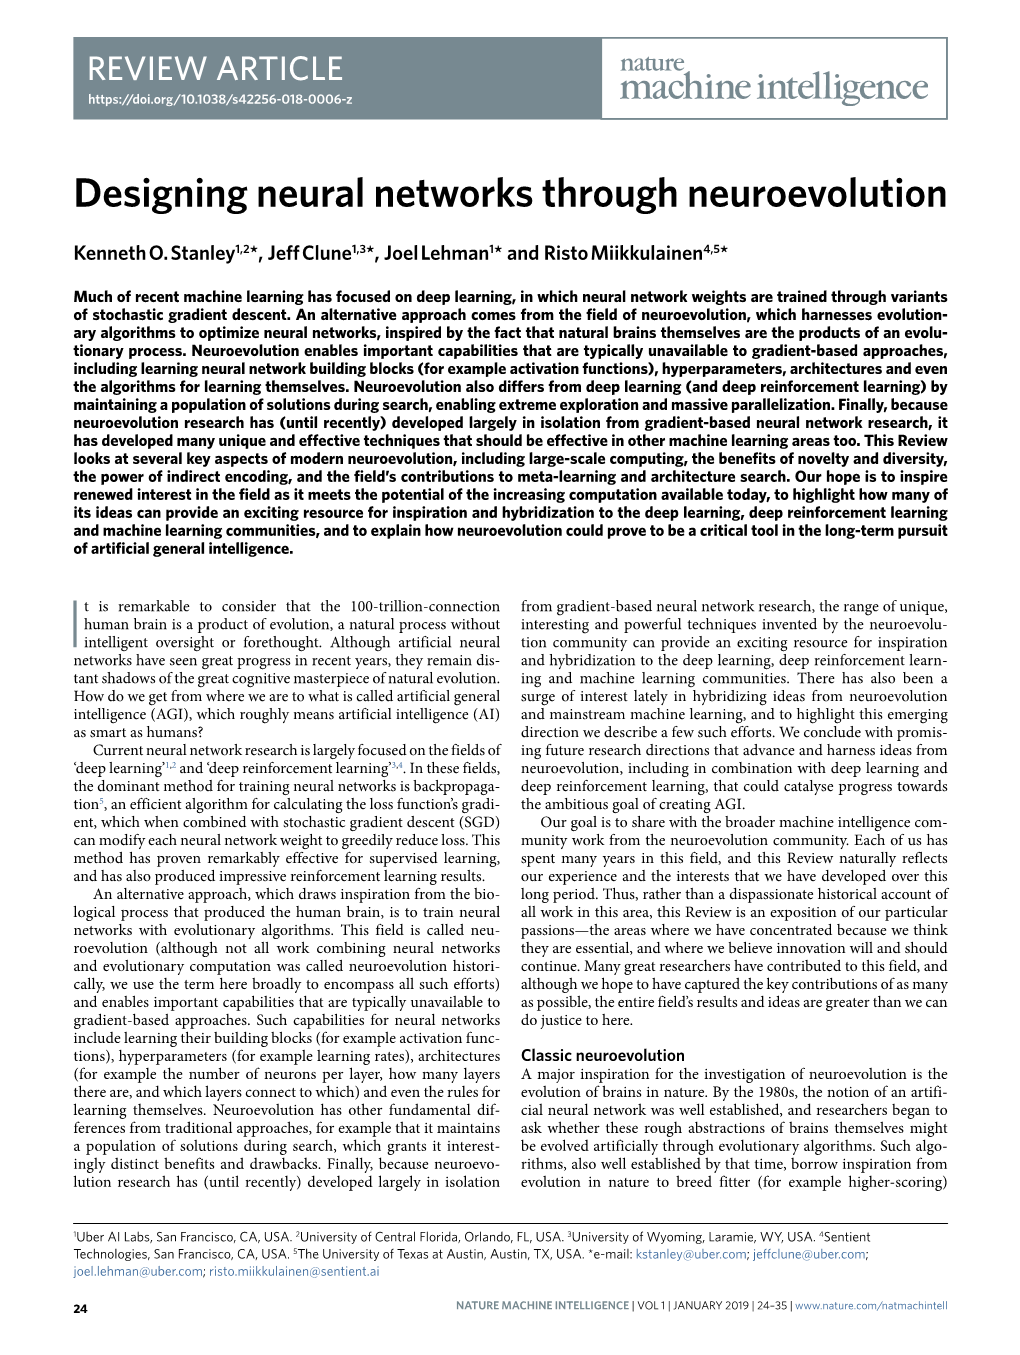 Designing Neural Networks Through Neuroevolution